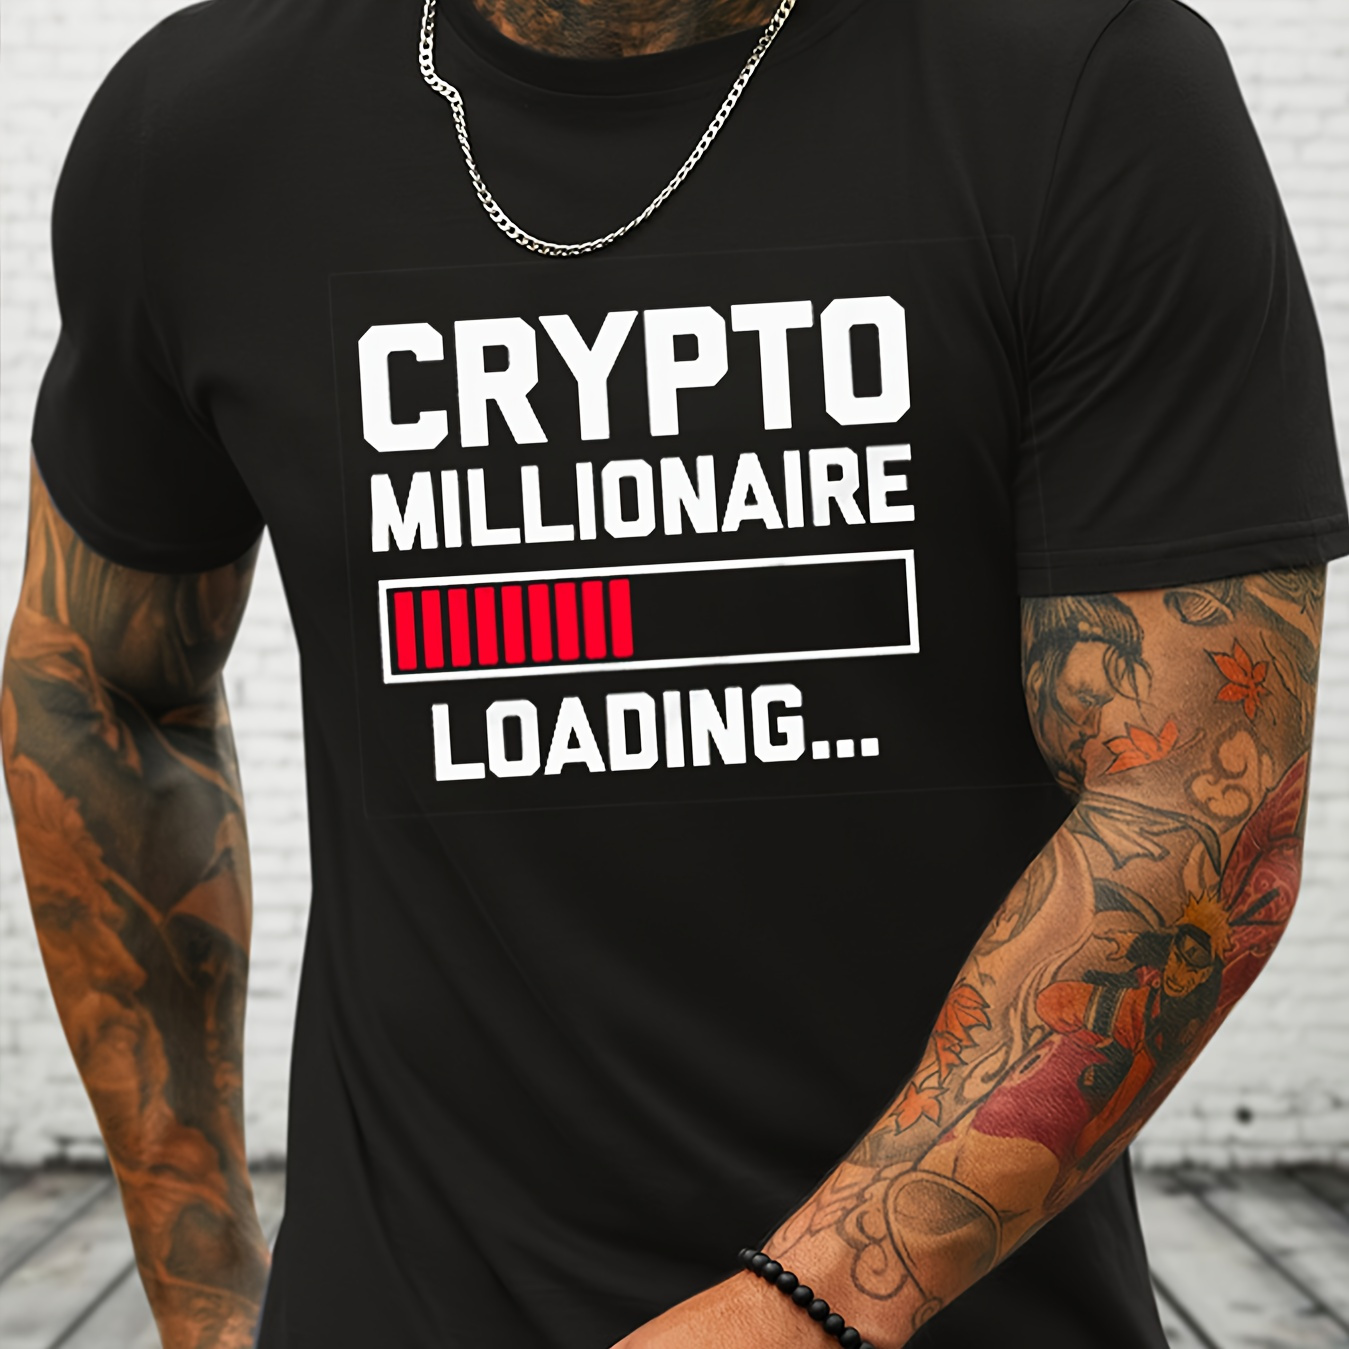 

Crypto Millionaire Print Men's Crew Neck T-shirt, Short Sleeve Versatile Casual Summer Clothes